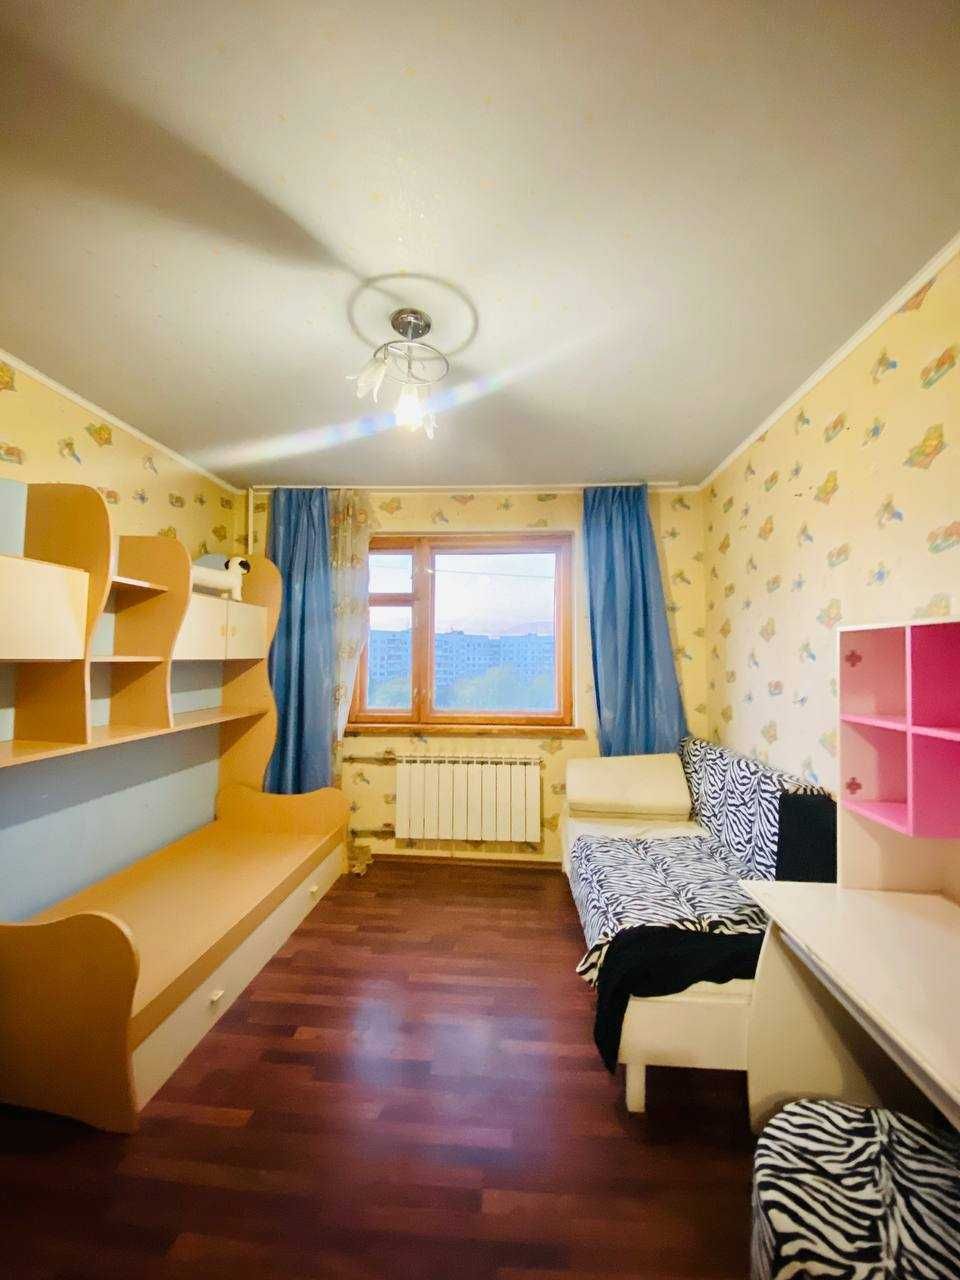 MS S4 Продам 4 комнатную квартиру Салтовка, Амосова, 624 м/р